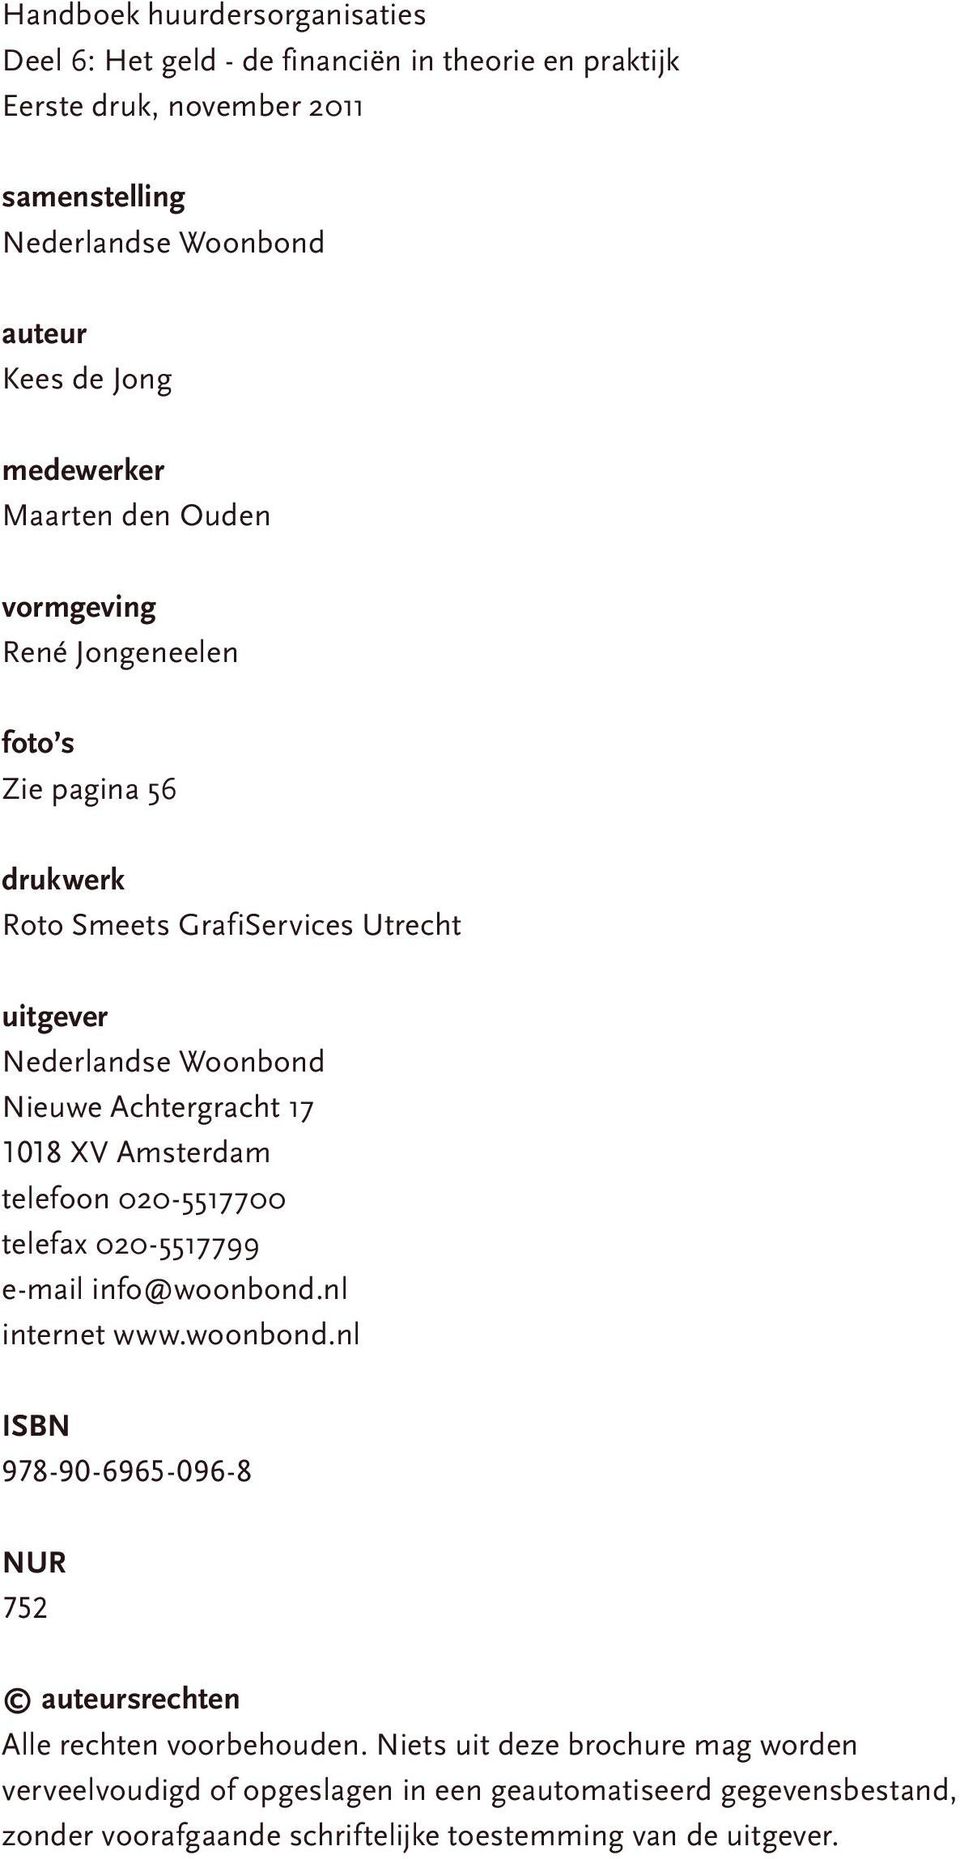 17 1018 XV Amsterdam telefoon 020-5517700 telefax 020-5517799 e-mail info@woonbond.nl internet www.woonbond.nl ISBN 978-90-6965-096-8 NUR 752 auteursrechten Alle rechten voorbehouden.